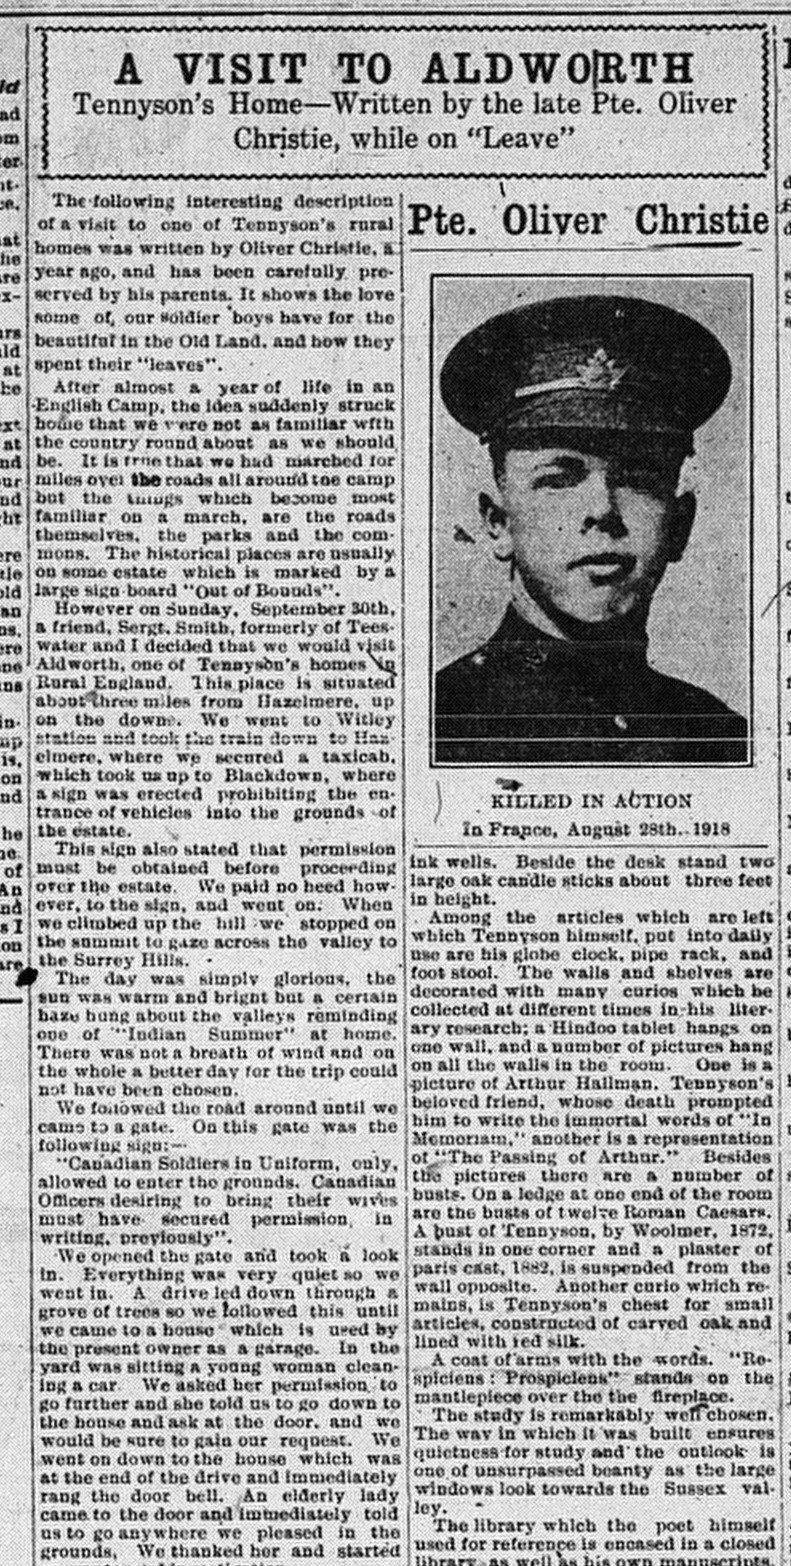 Port Elgin Times, September 18, 1918, p. 1, part 1 of 2